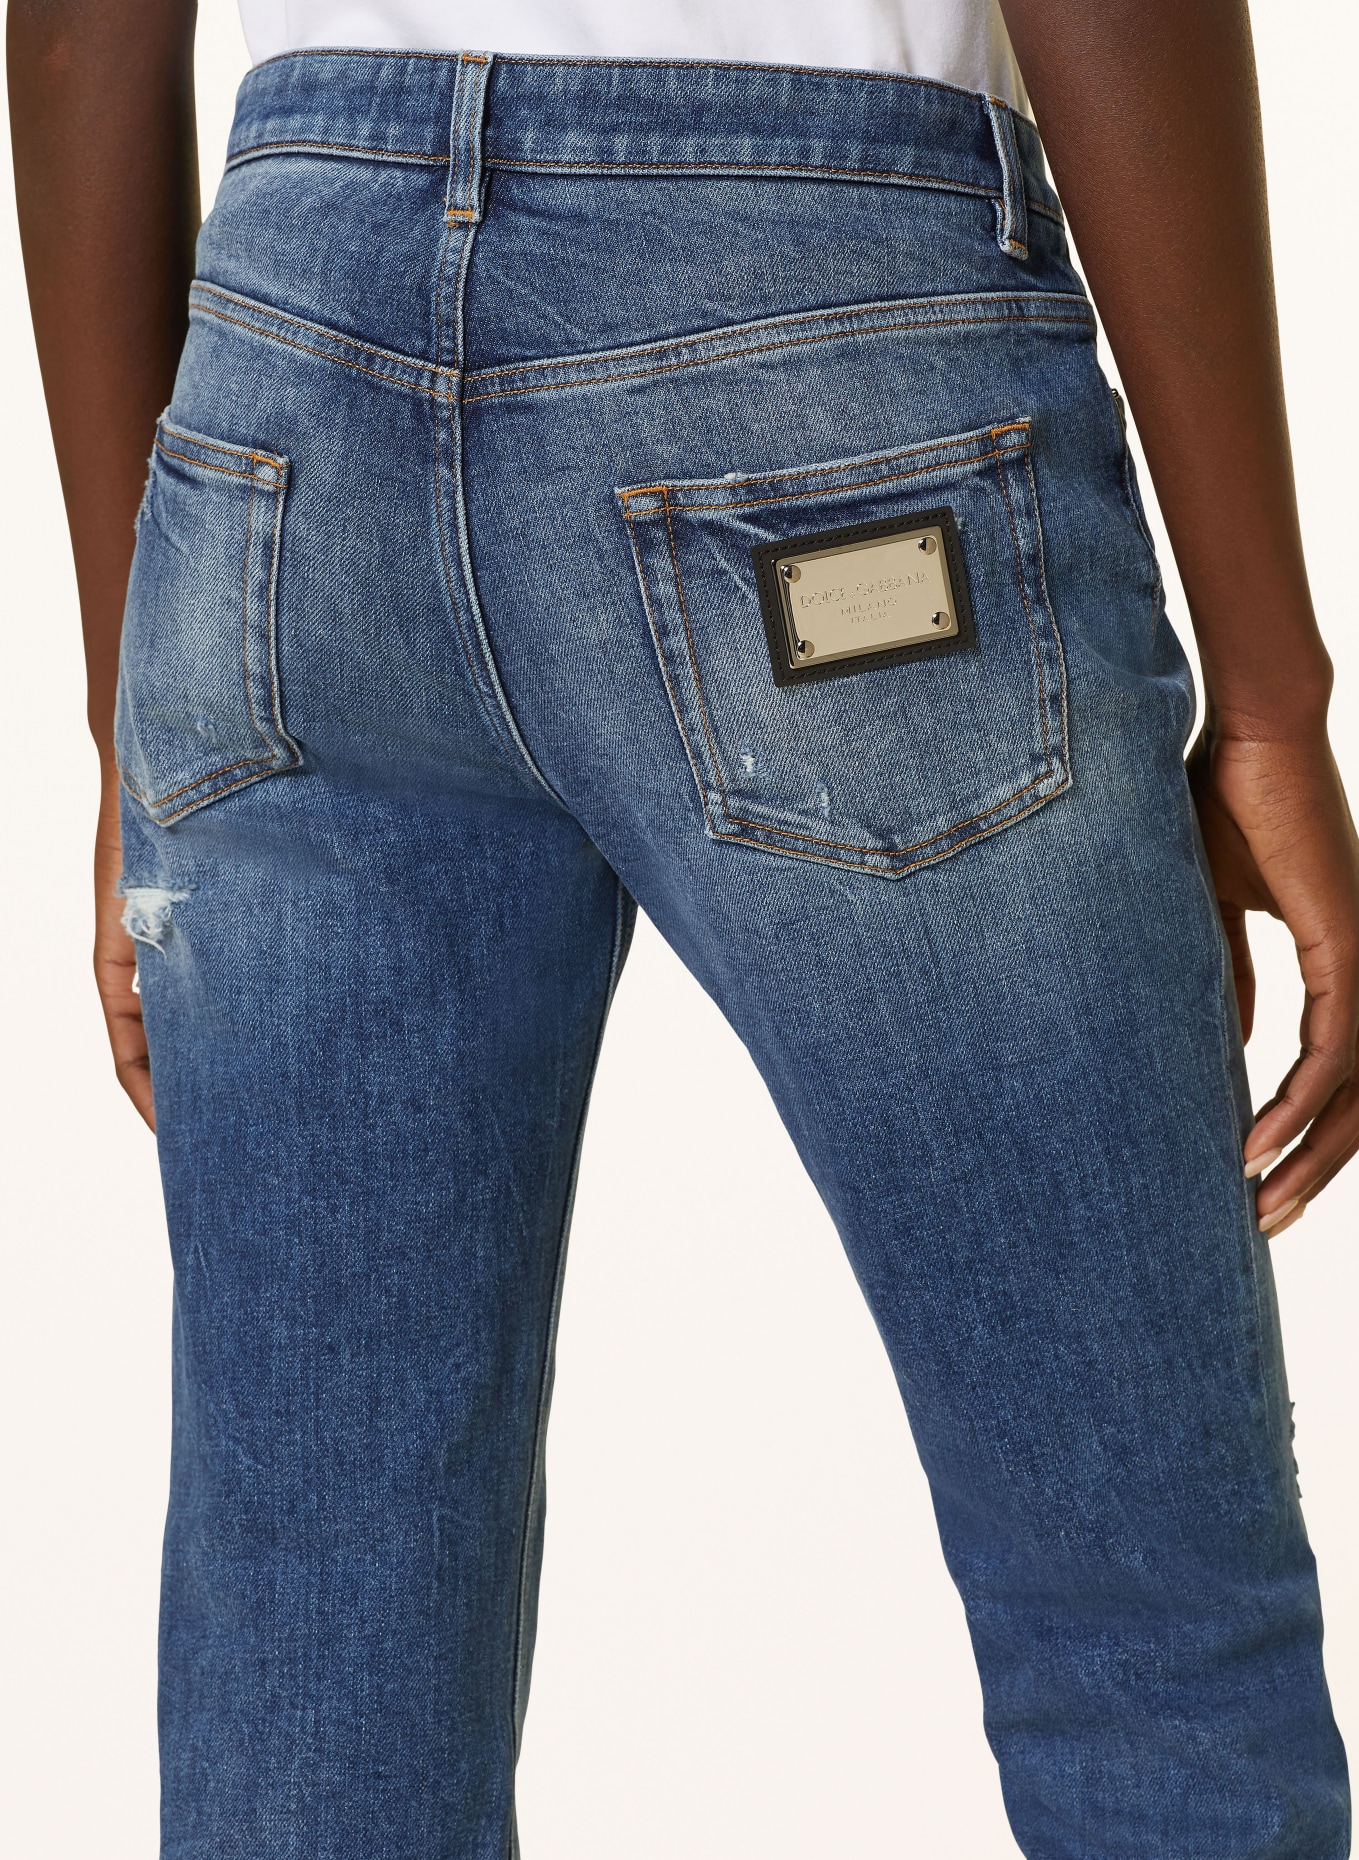 DOLCE & GABBANA Skinny jeans, Color: S9001 VARIANTE ABBINATA (Image 5)